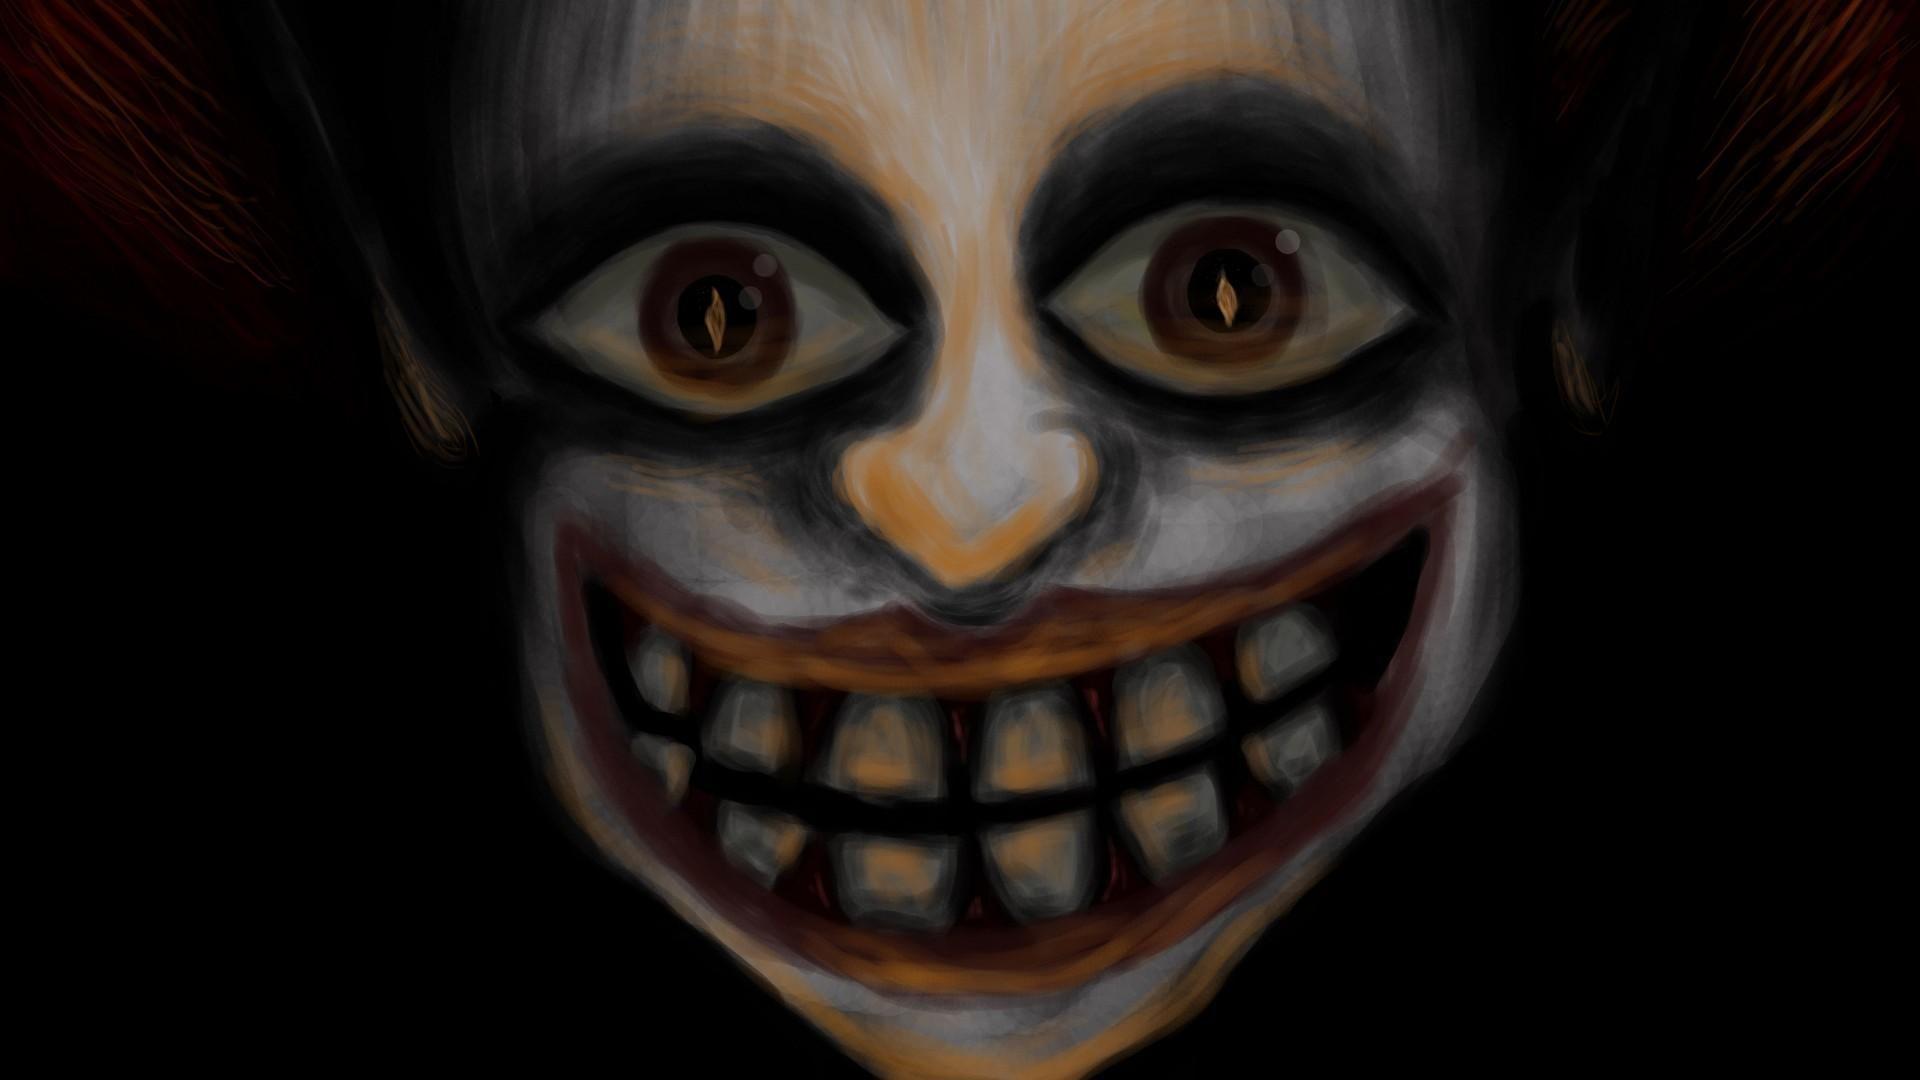 Creepy Clown Art Image Wallpaper. Wallpaper Studio 10